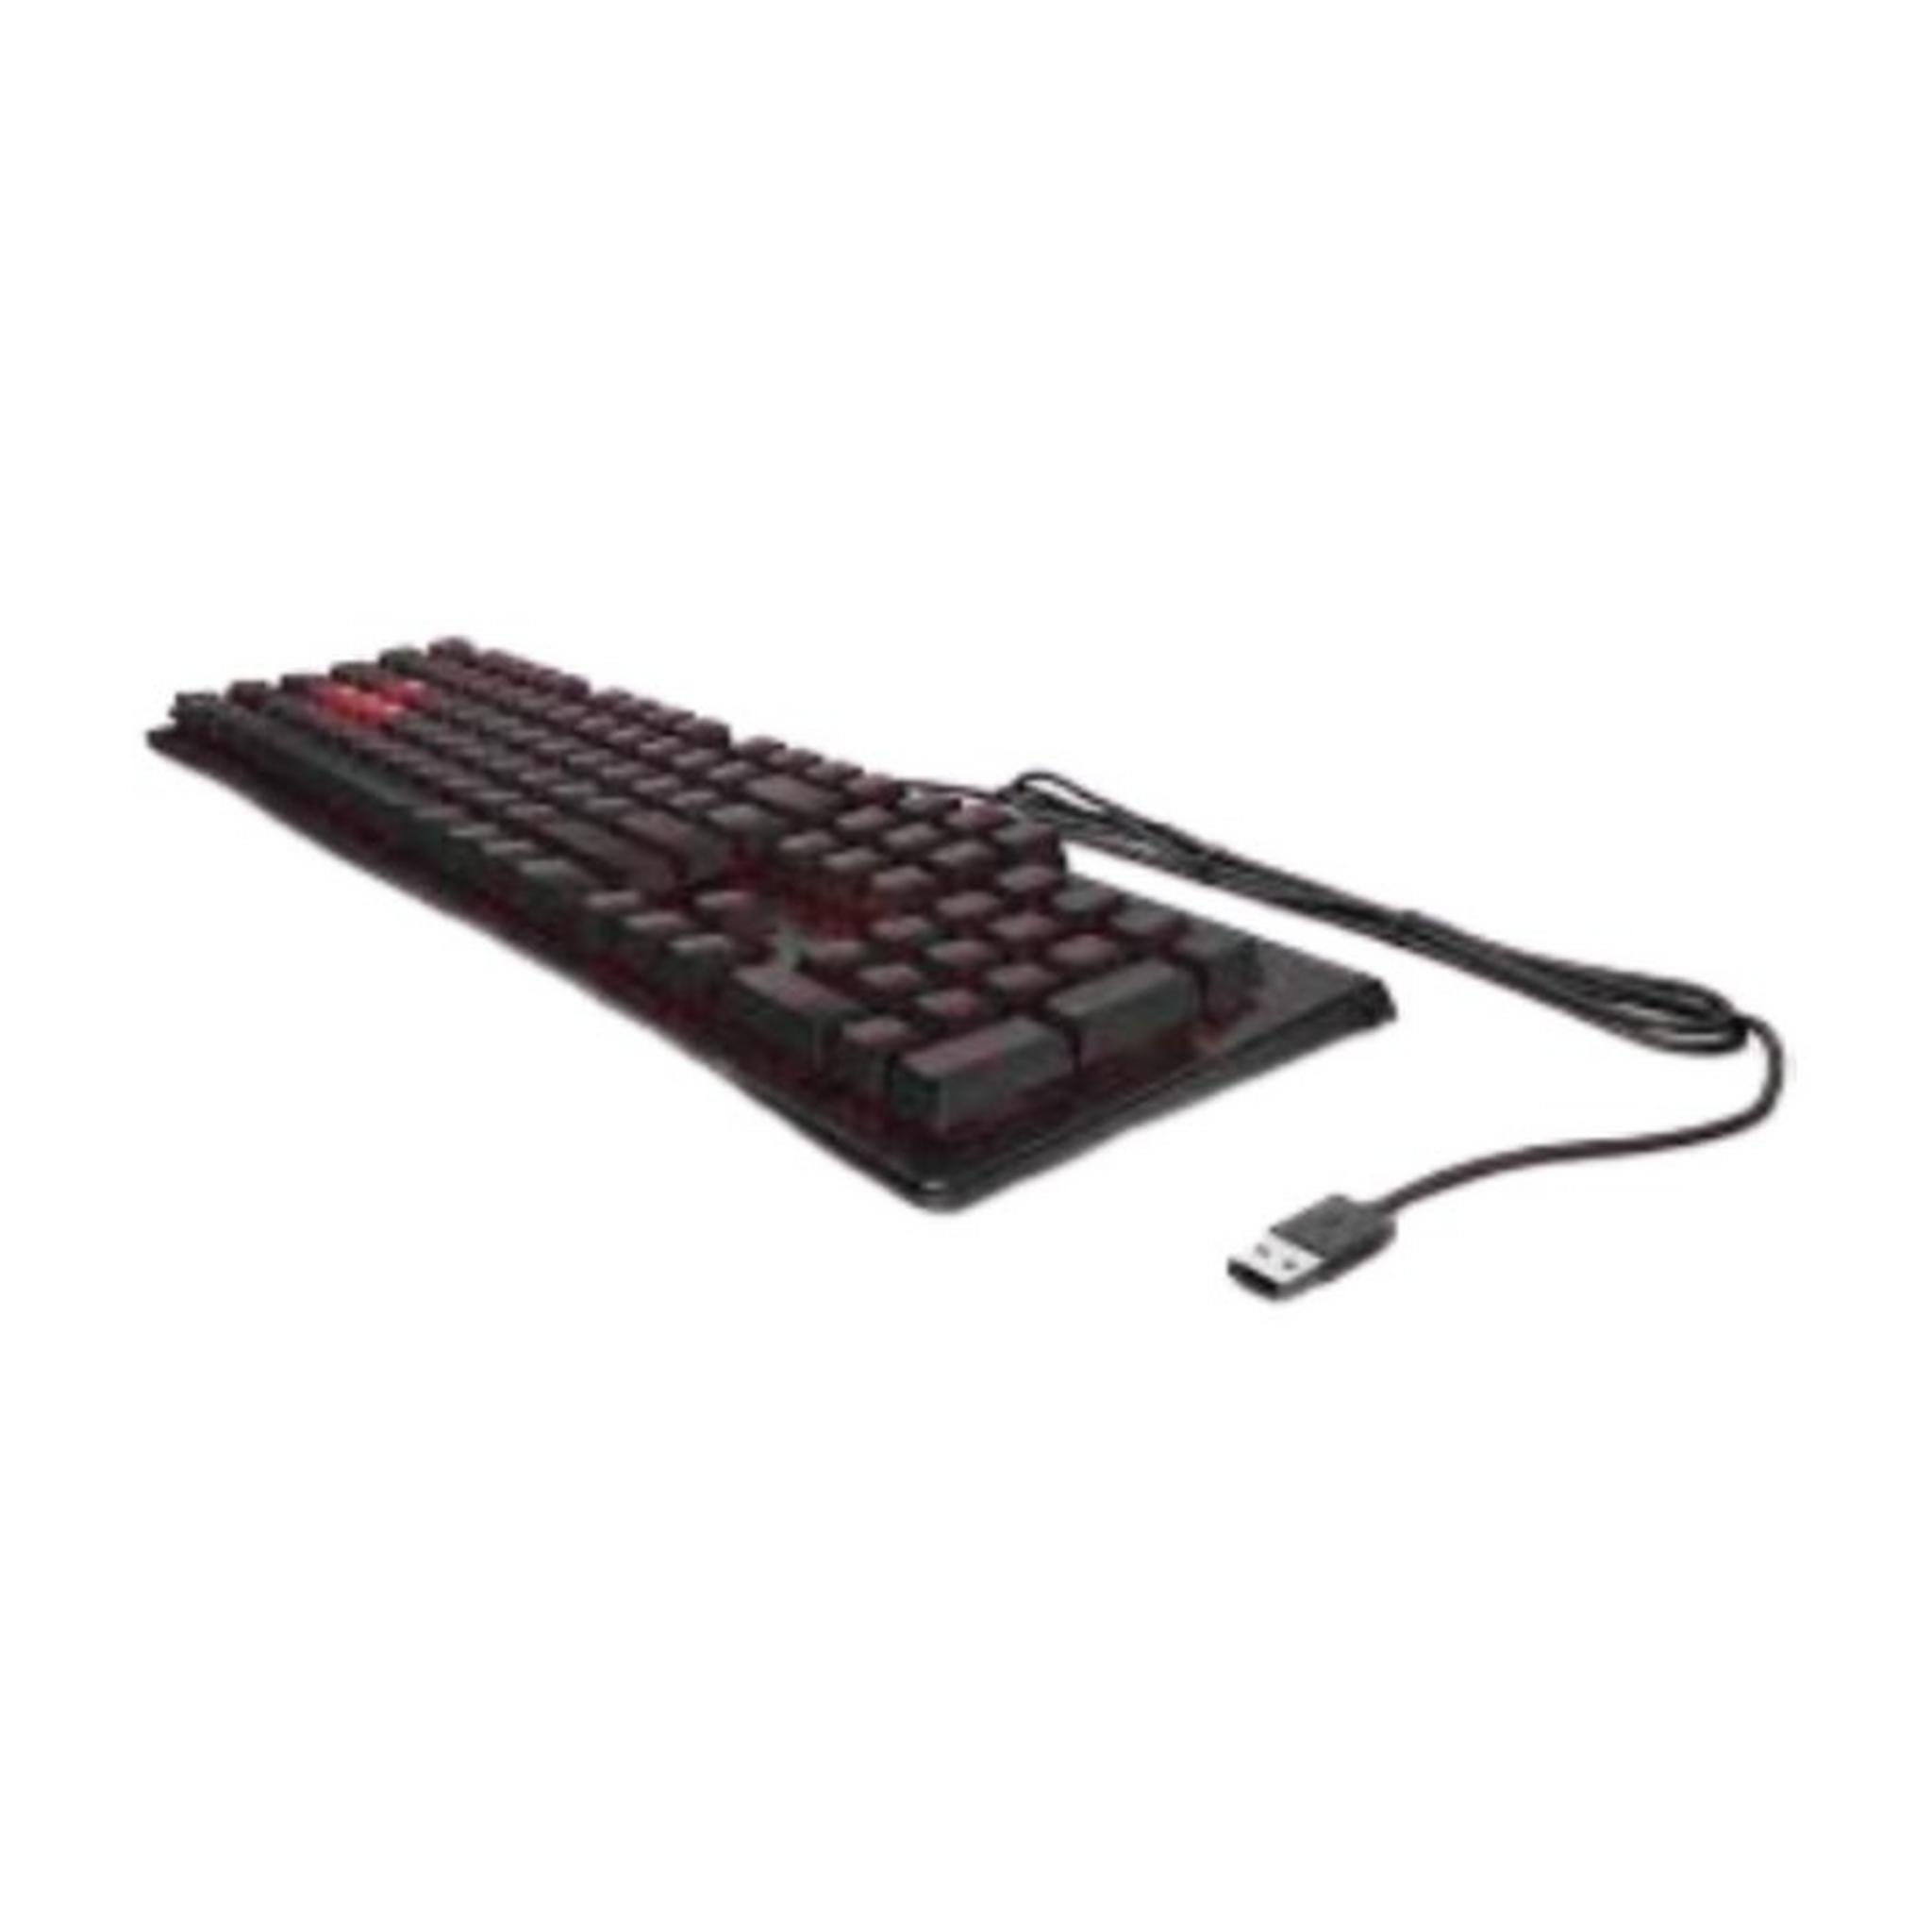 HP Omen Encoder Mechanical Cherry MX Brown Gaming Keyboard